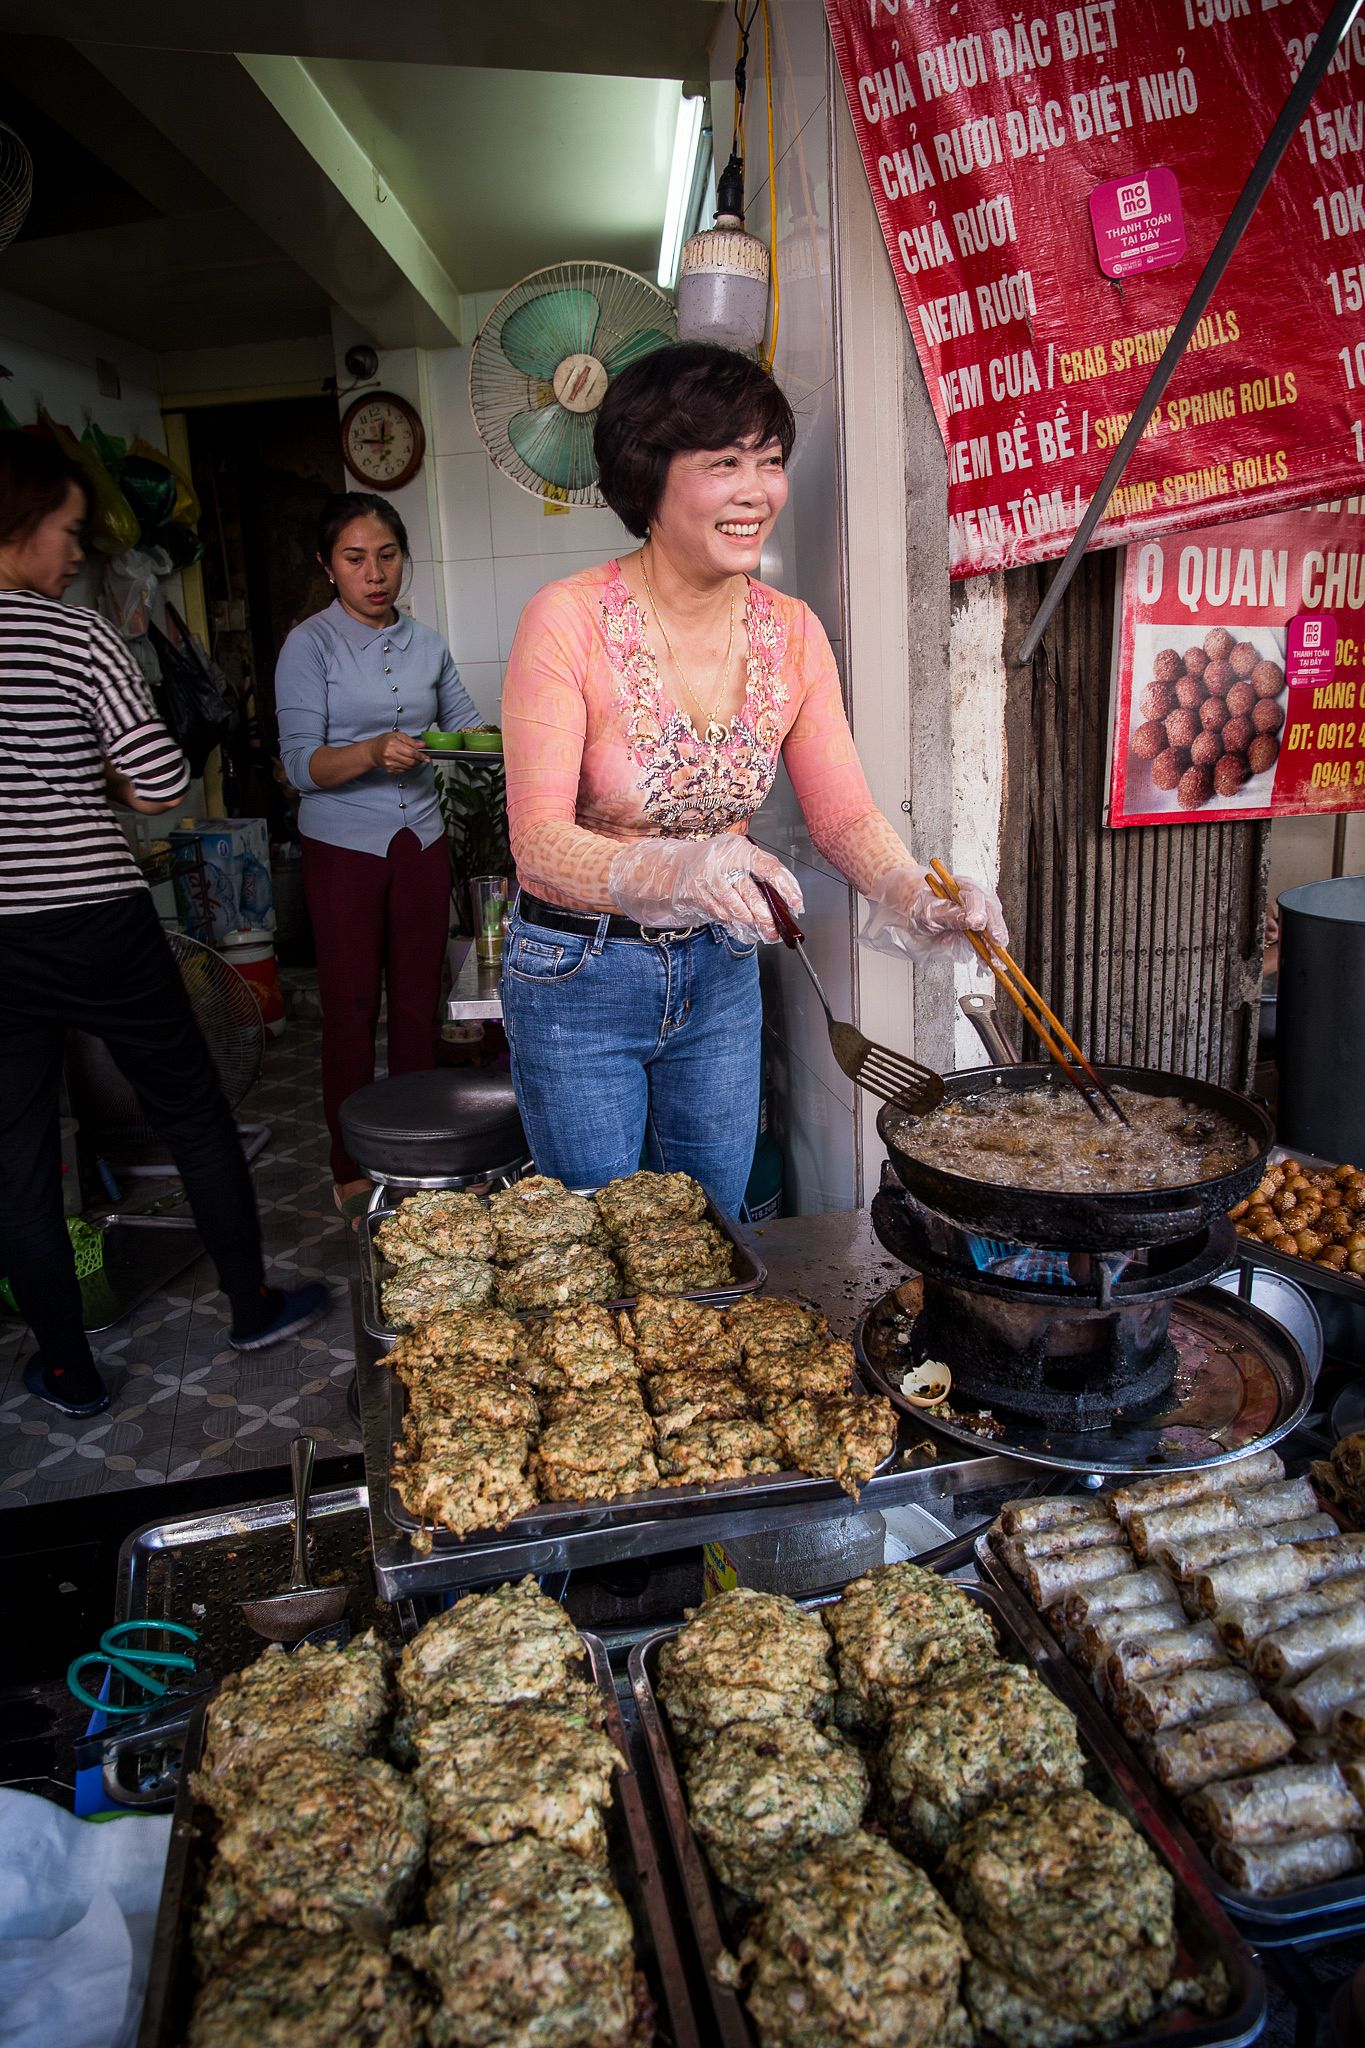 Cha Ruoi Hung Thinh, популярный ресторан chả rươi в Ханое. Фото Джули Вола.